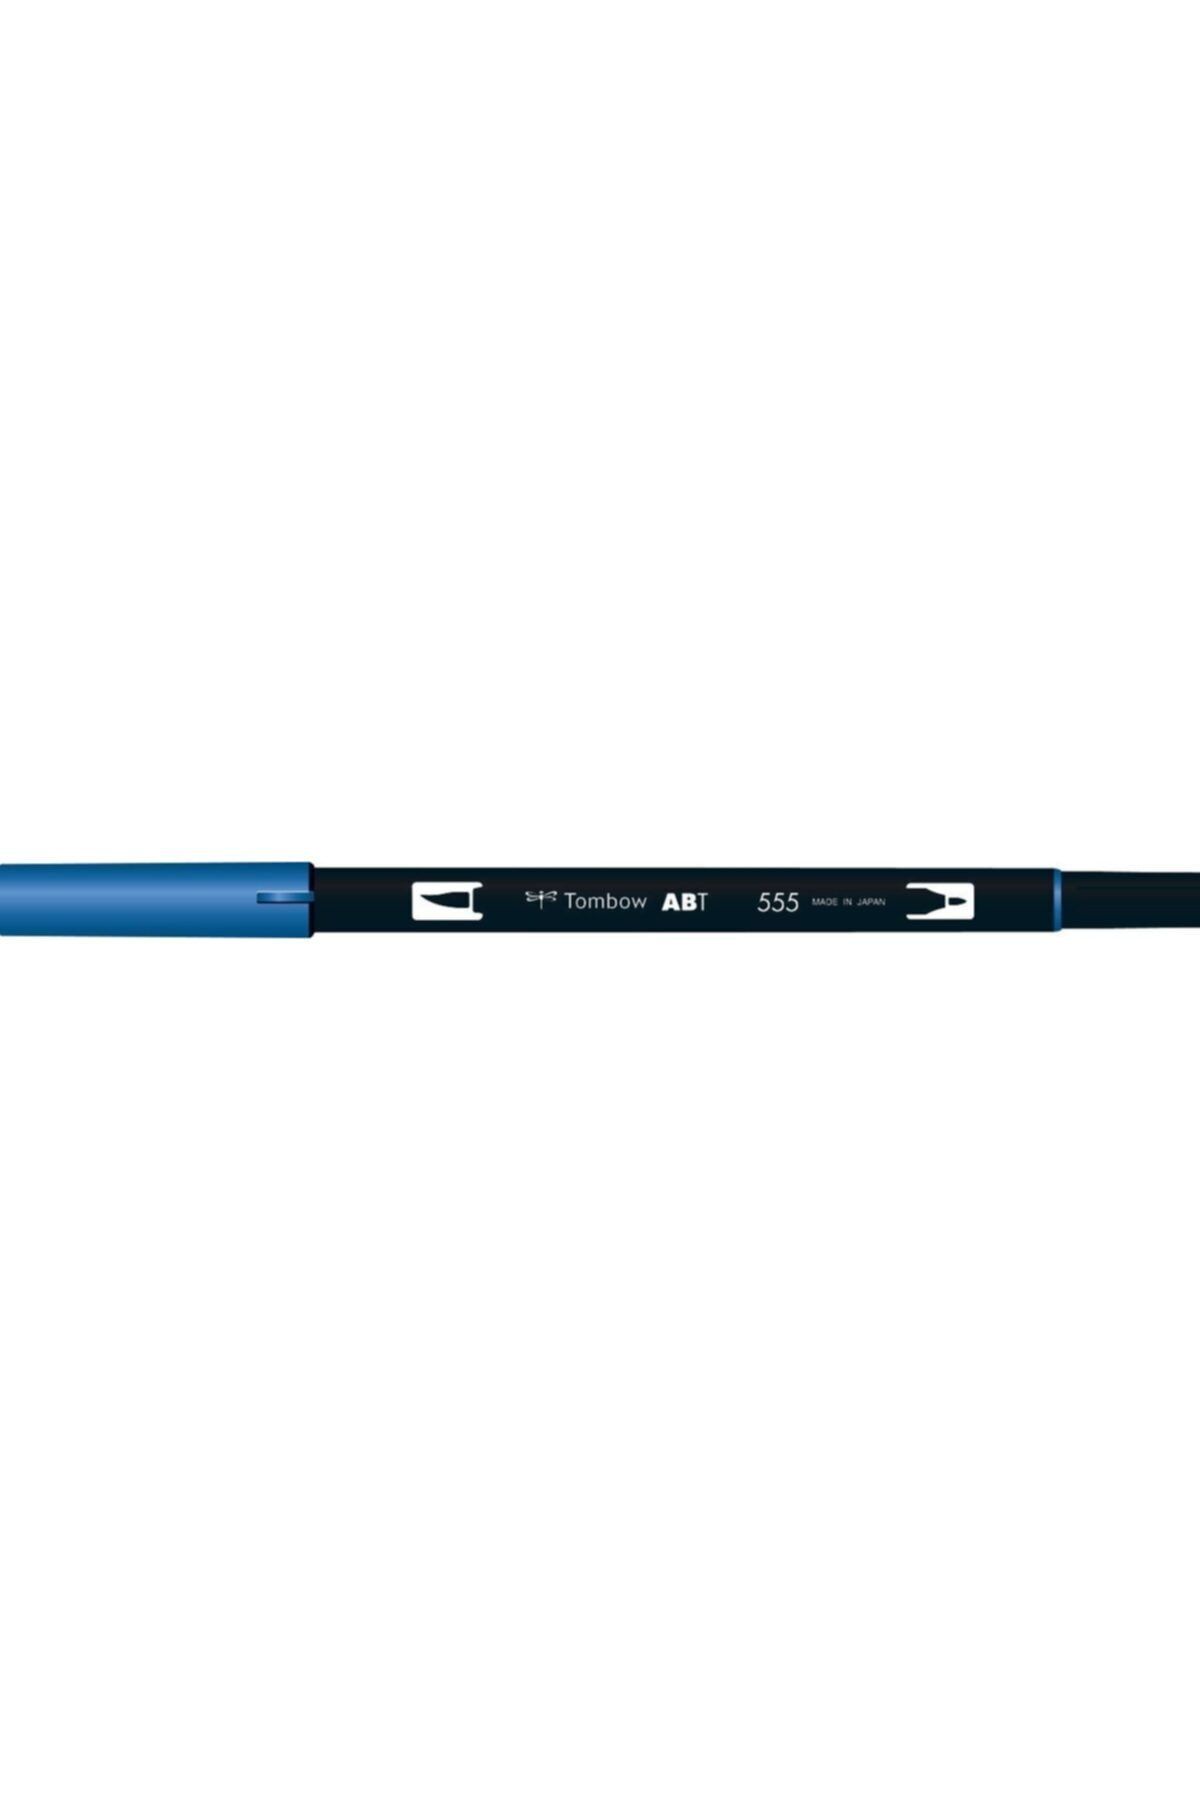 Tombow Ab-t Dual Brush Pen - Ultramarine - 555